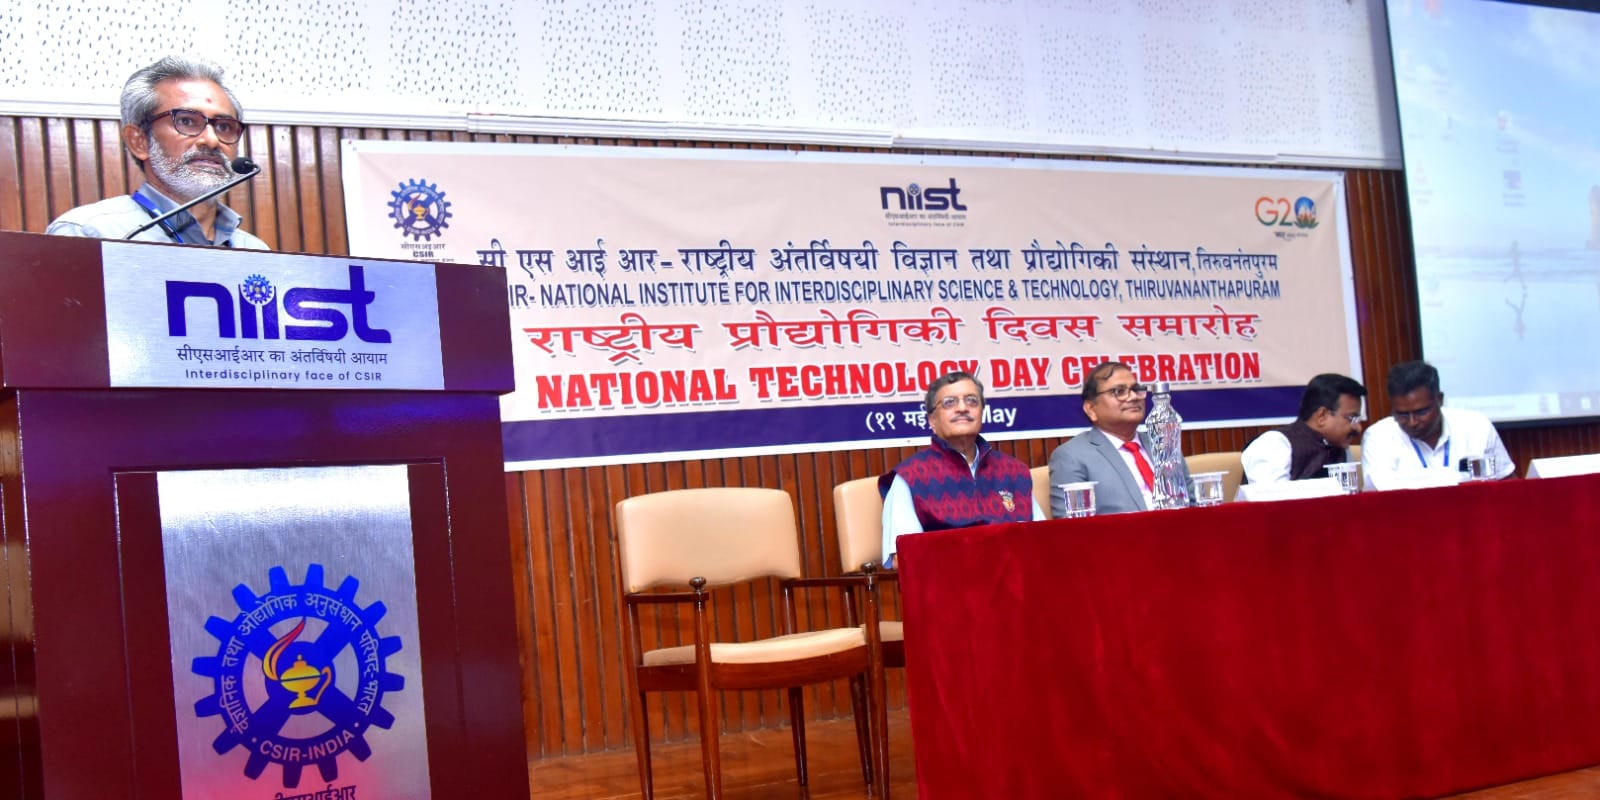 National Technology Day Celebrations at CSIR-NIIST - 2023